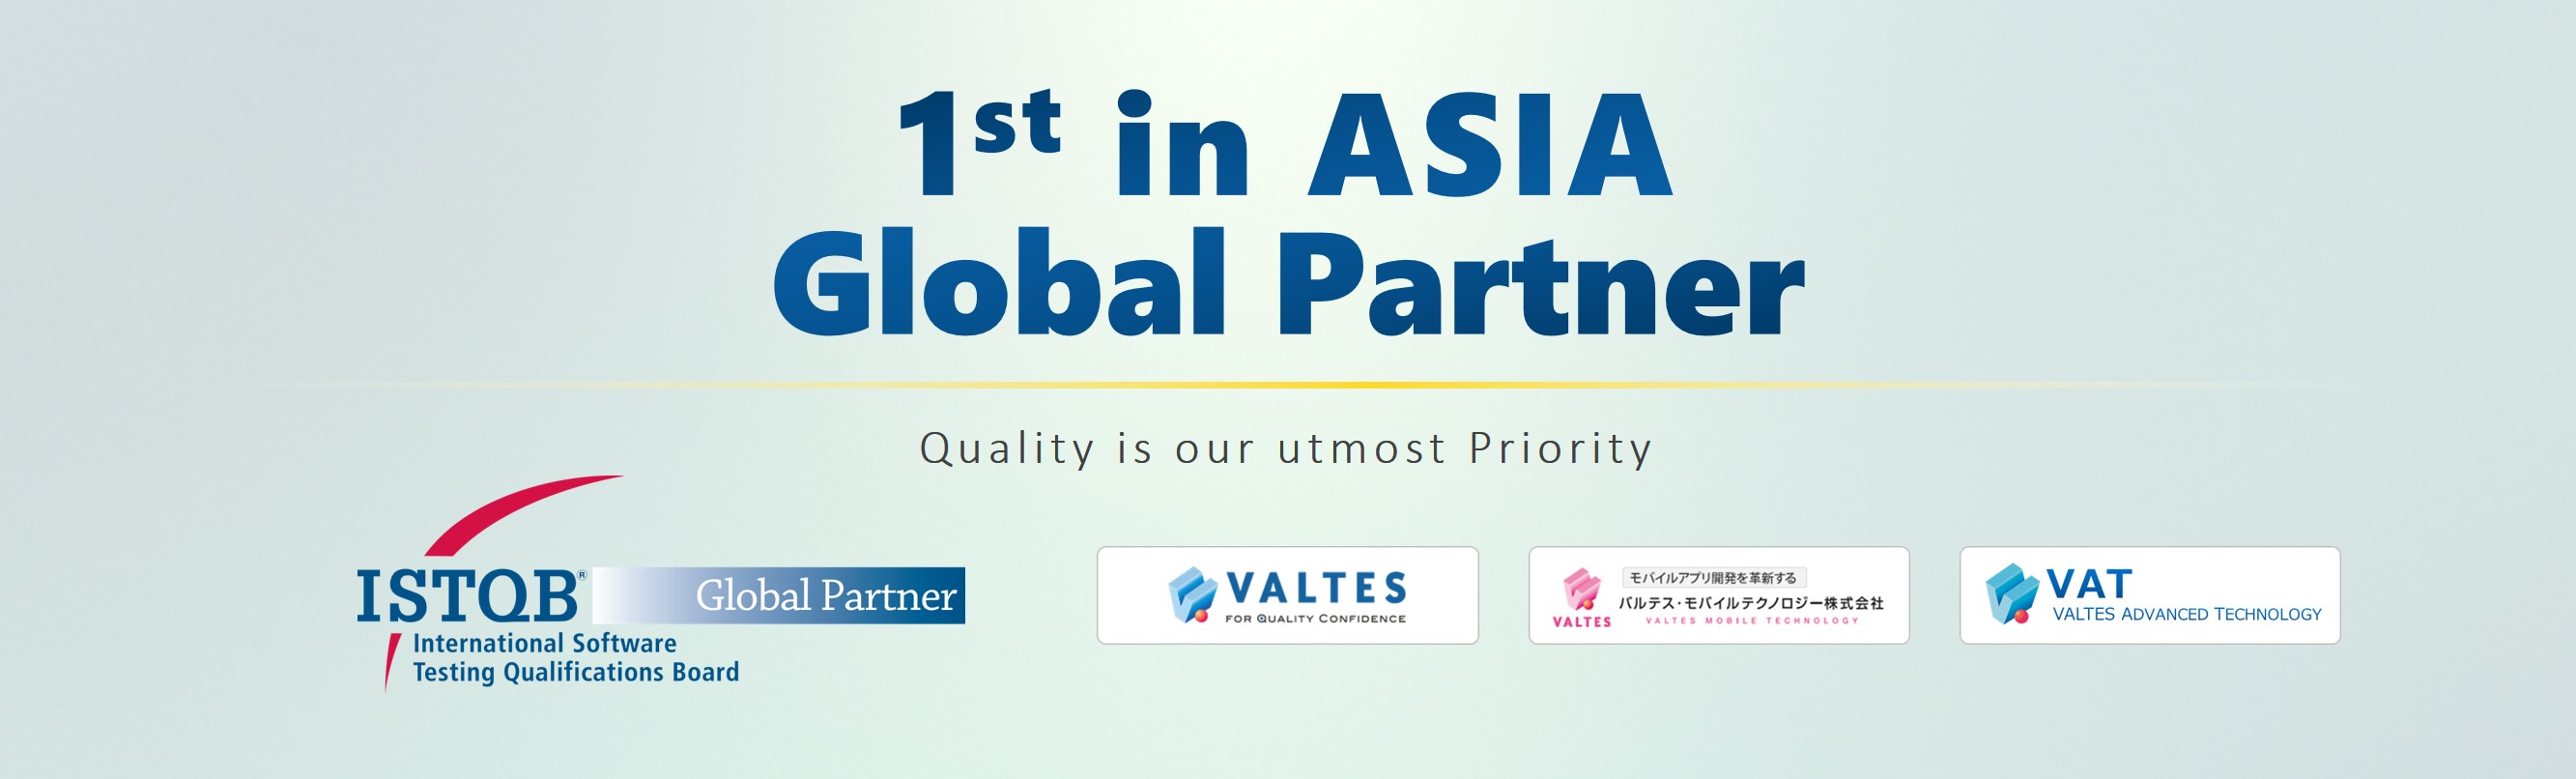 ISTQB Global Partner